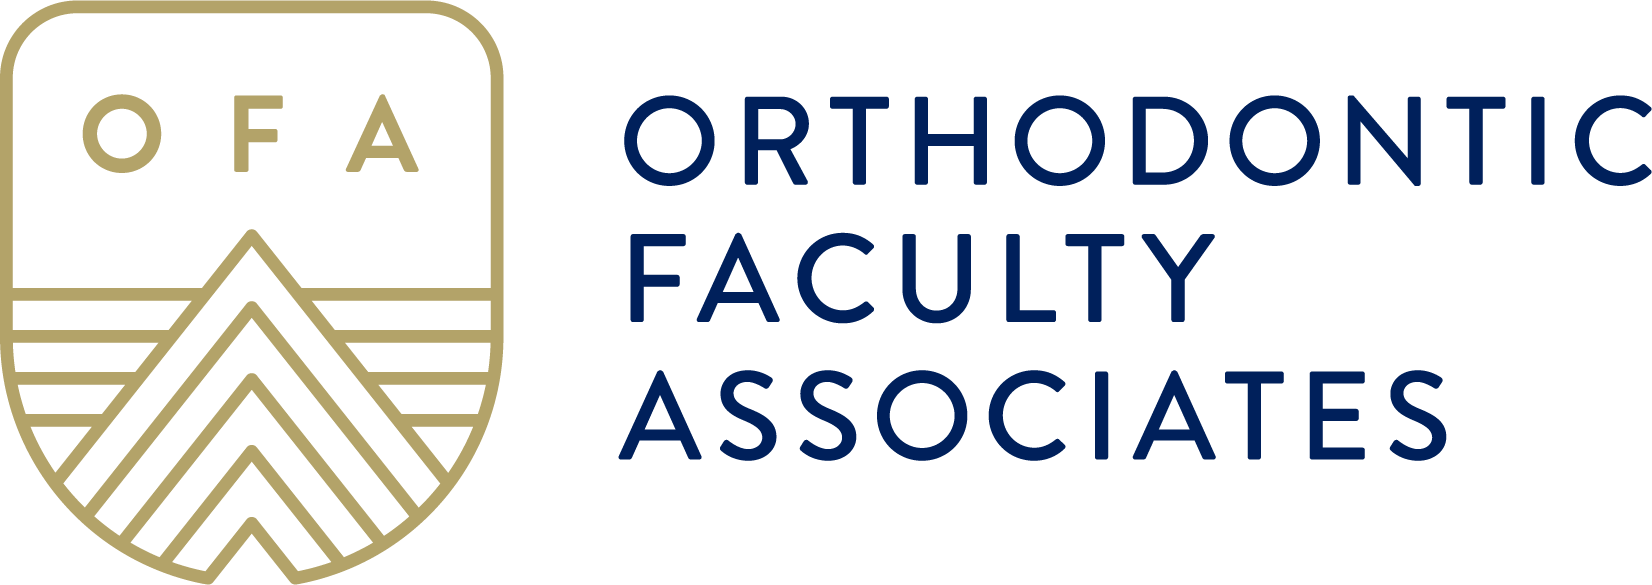 Orthodontic Faculty Associates